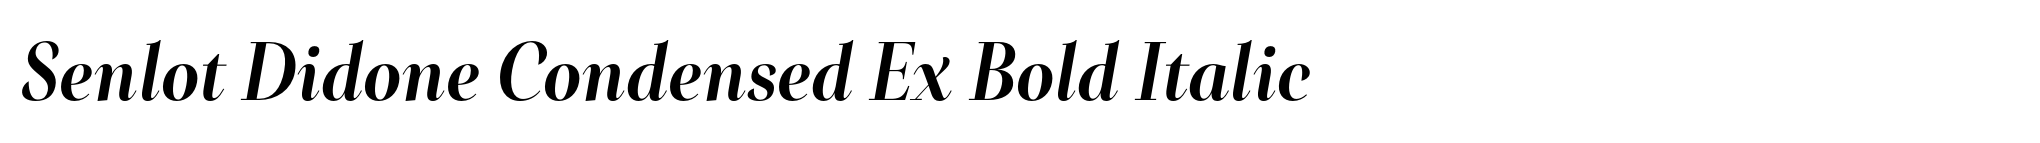 Senlot Didone Condensed Ex Bold Italic image